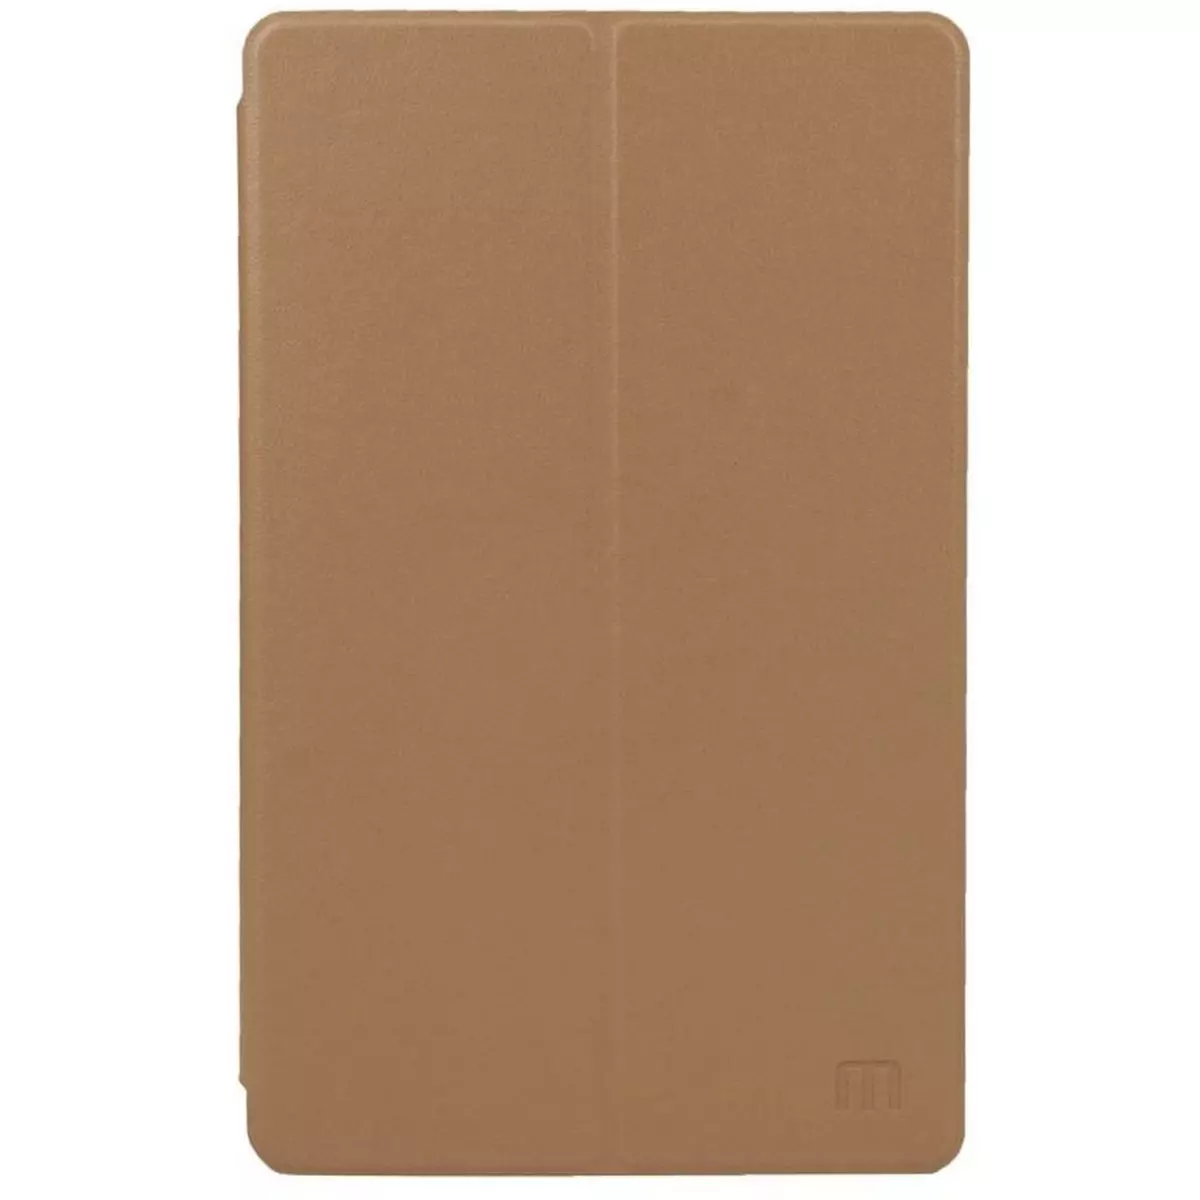 MOBILIS Protection Folio pour Tablette Galaxy Tab A 2018 10.5 pouces Taupe